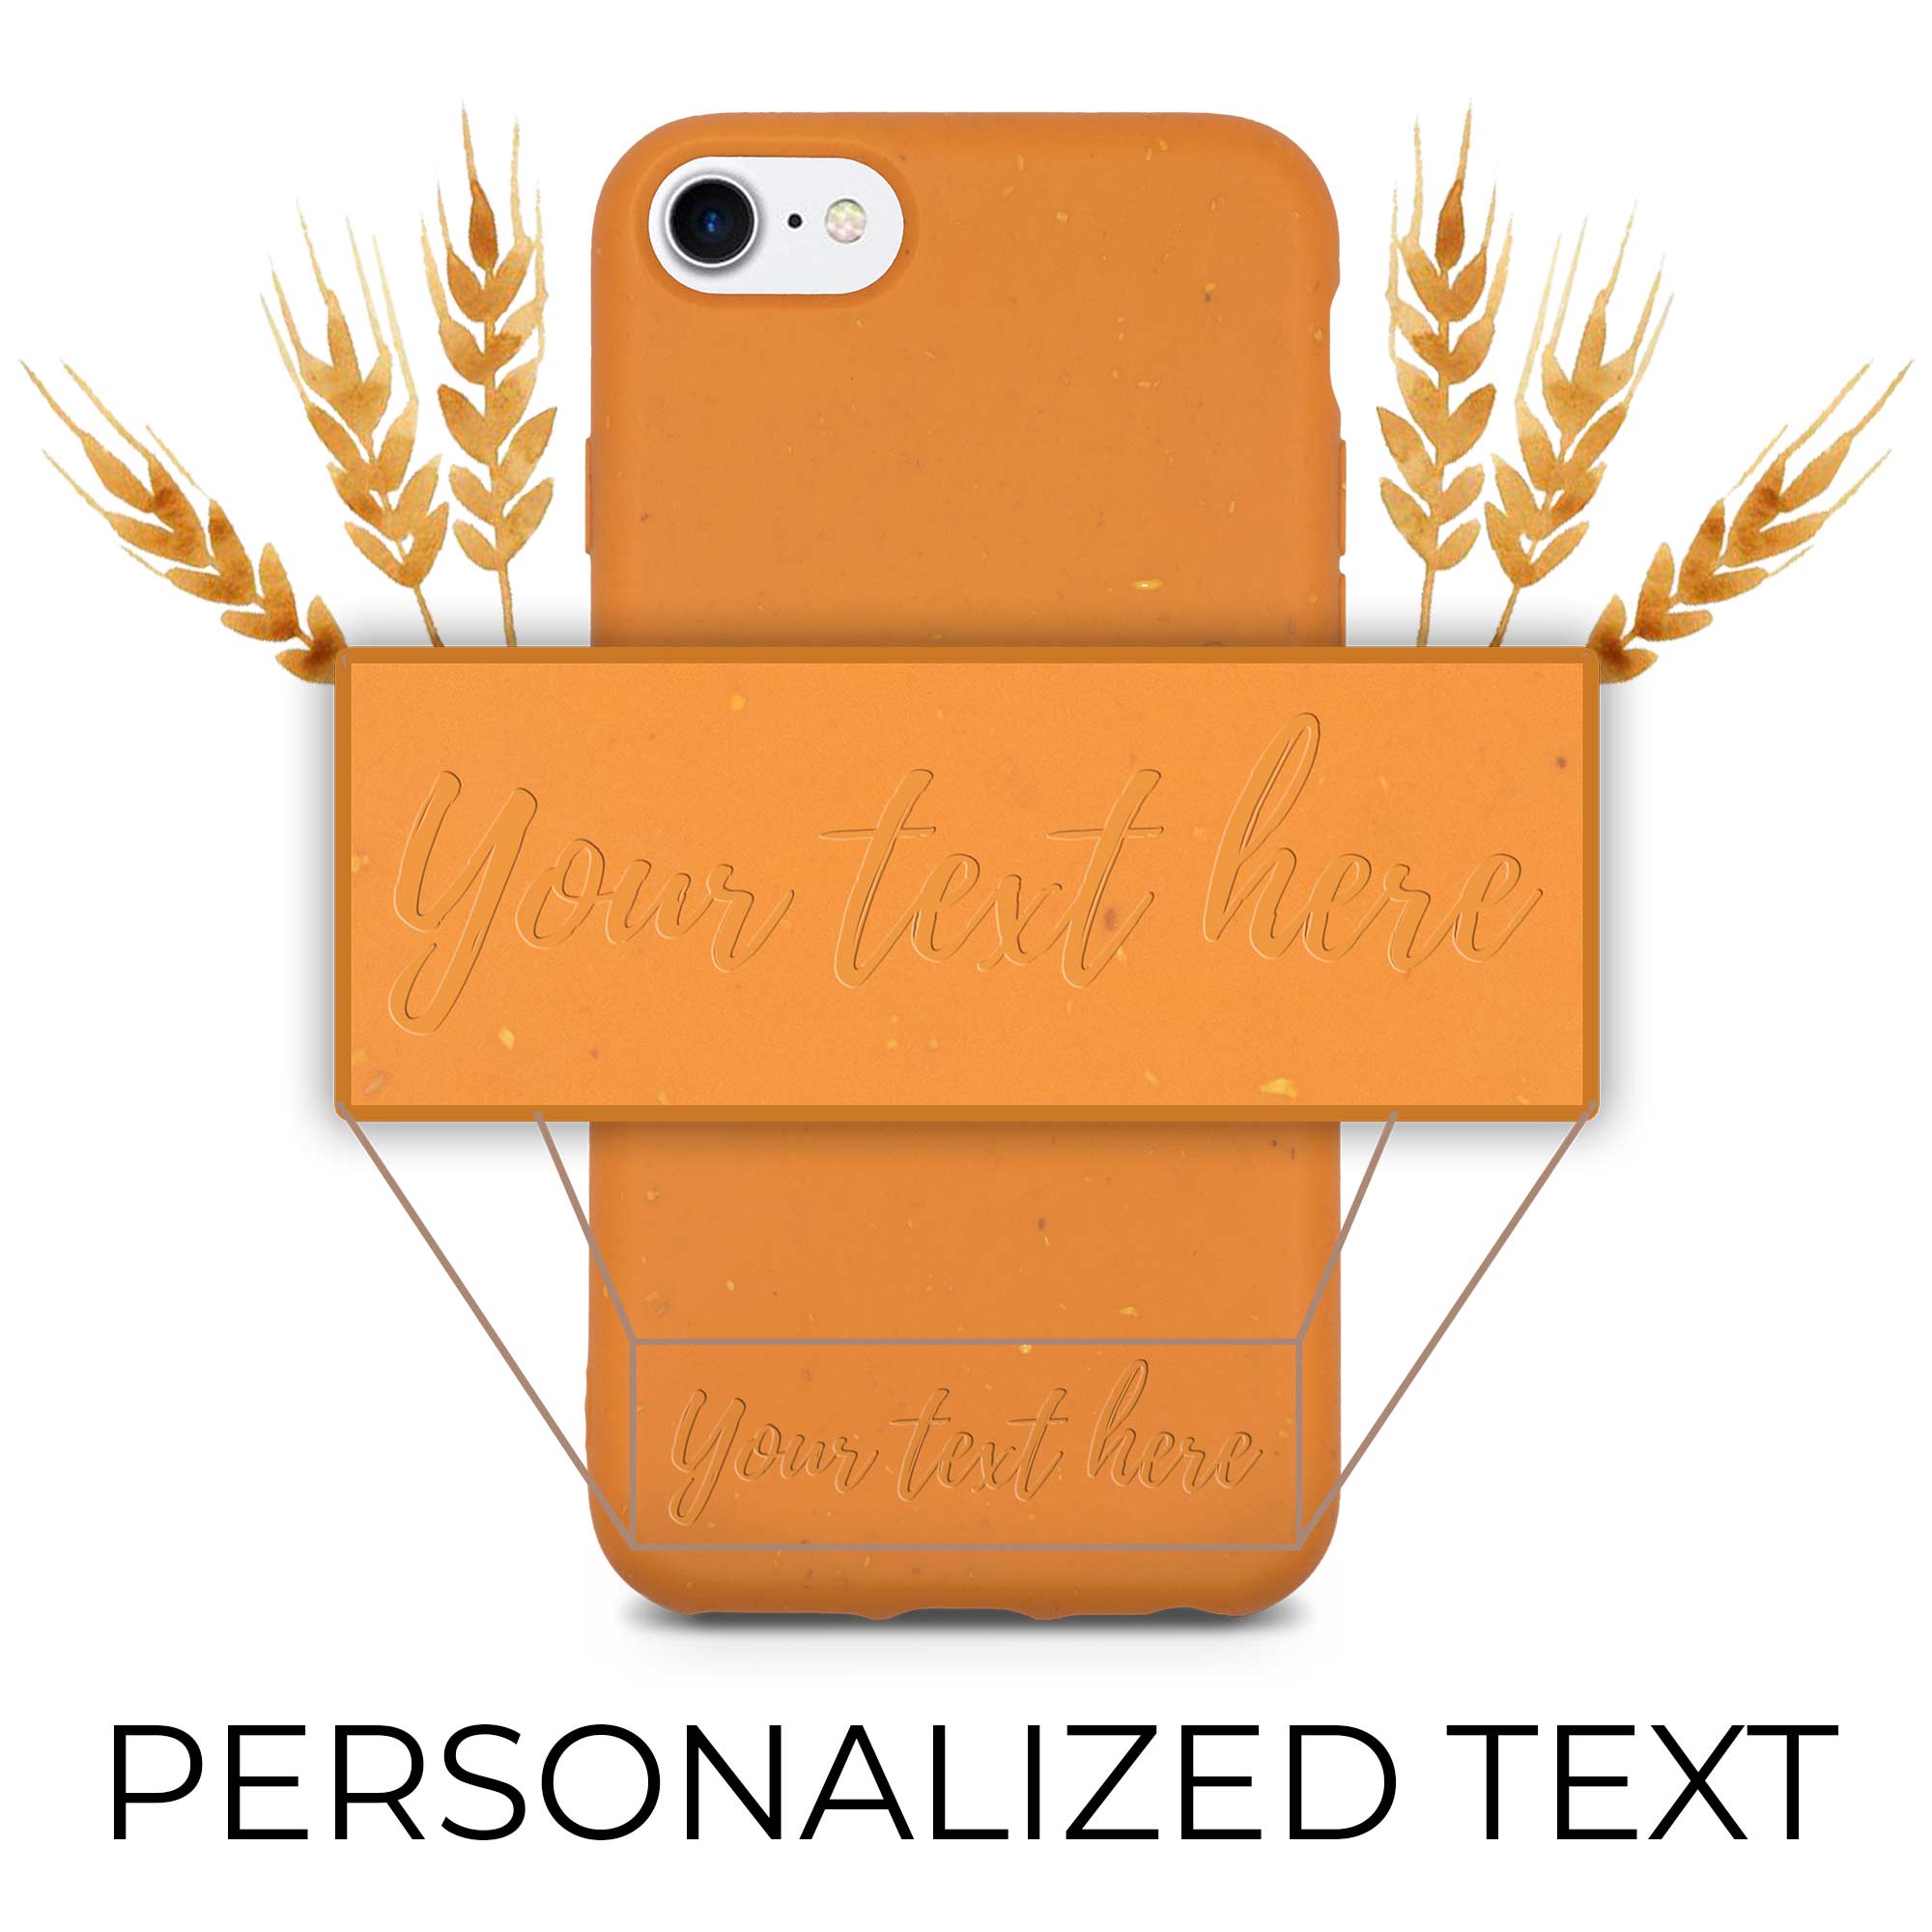 Texto personalizado personalizado en una funda naranja biodegradable para iPhone